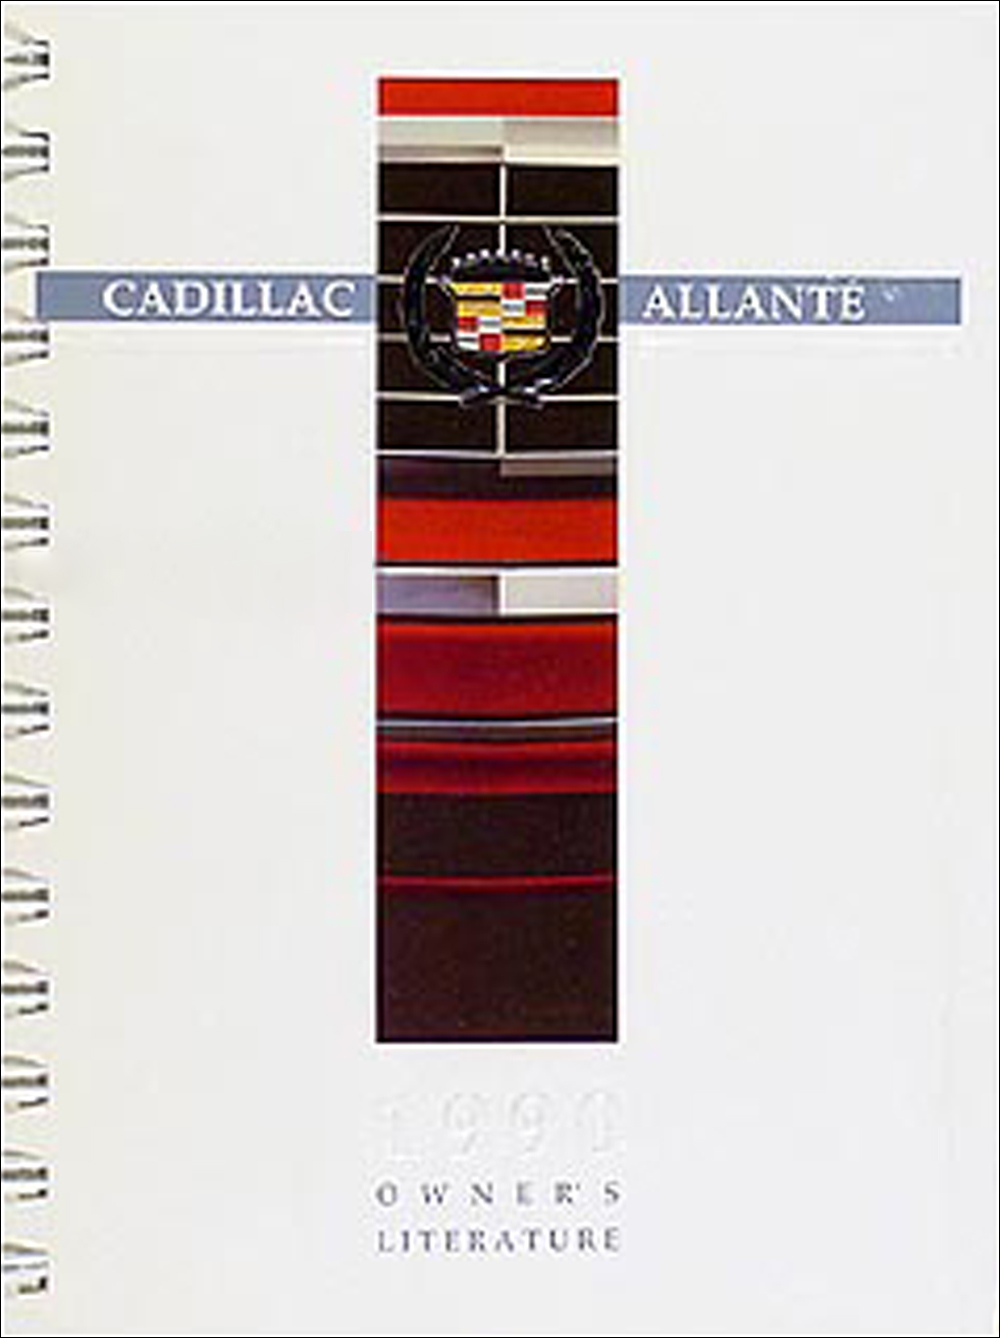 1990 Cadillac Allante Original Owner's Manual